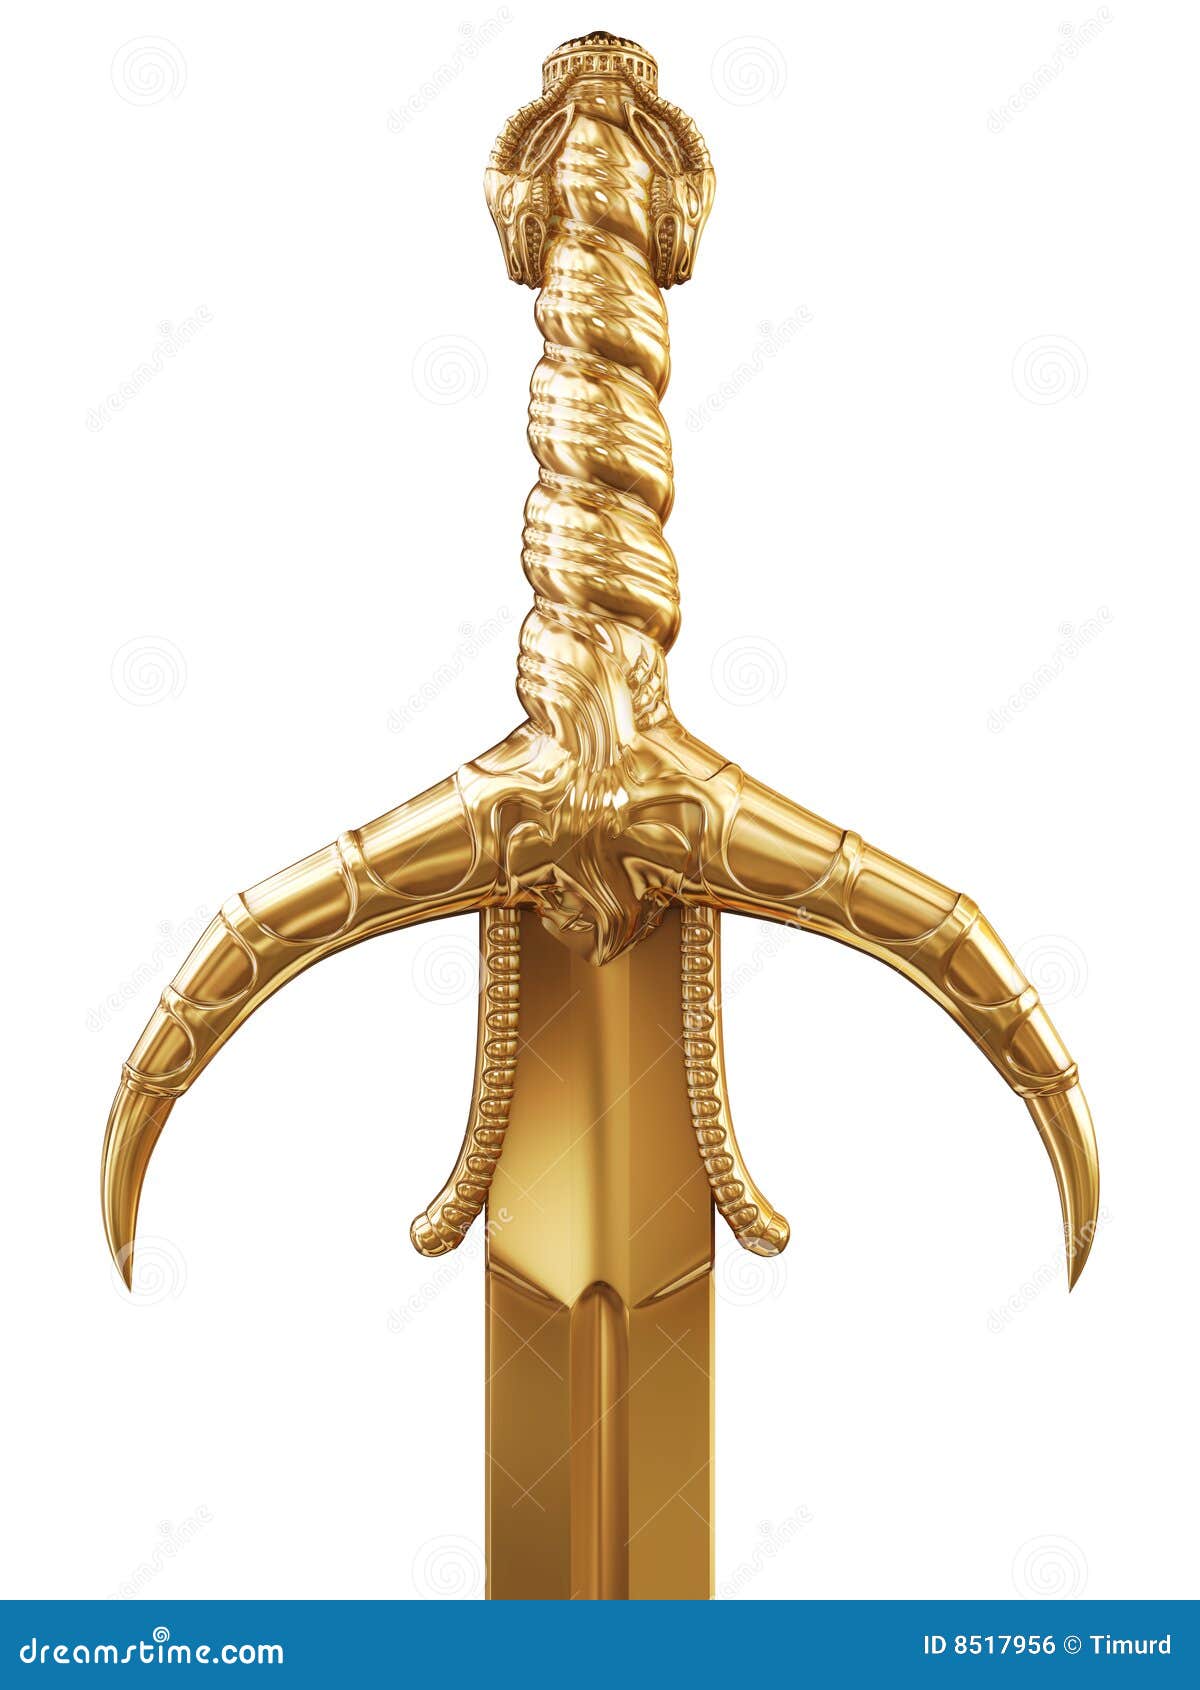 ancient-gold-sword-8517956.jpg